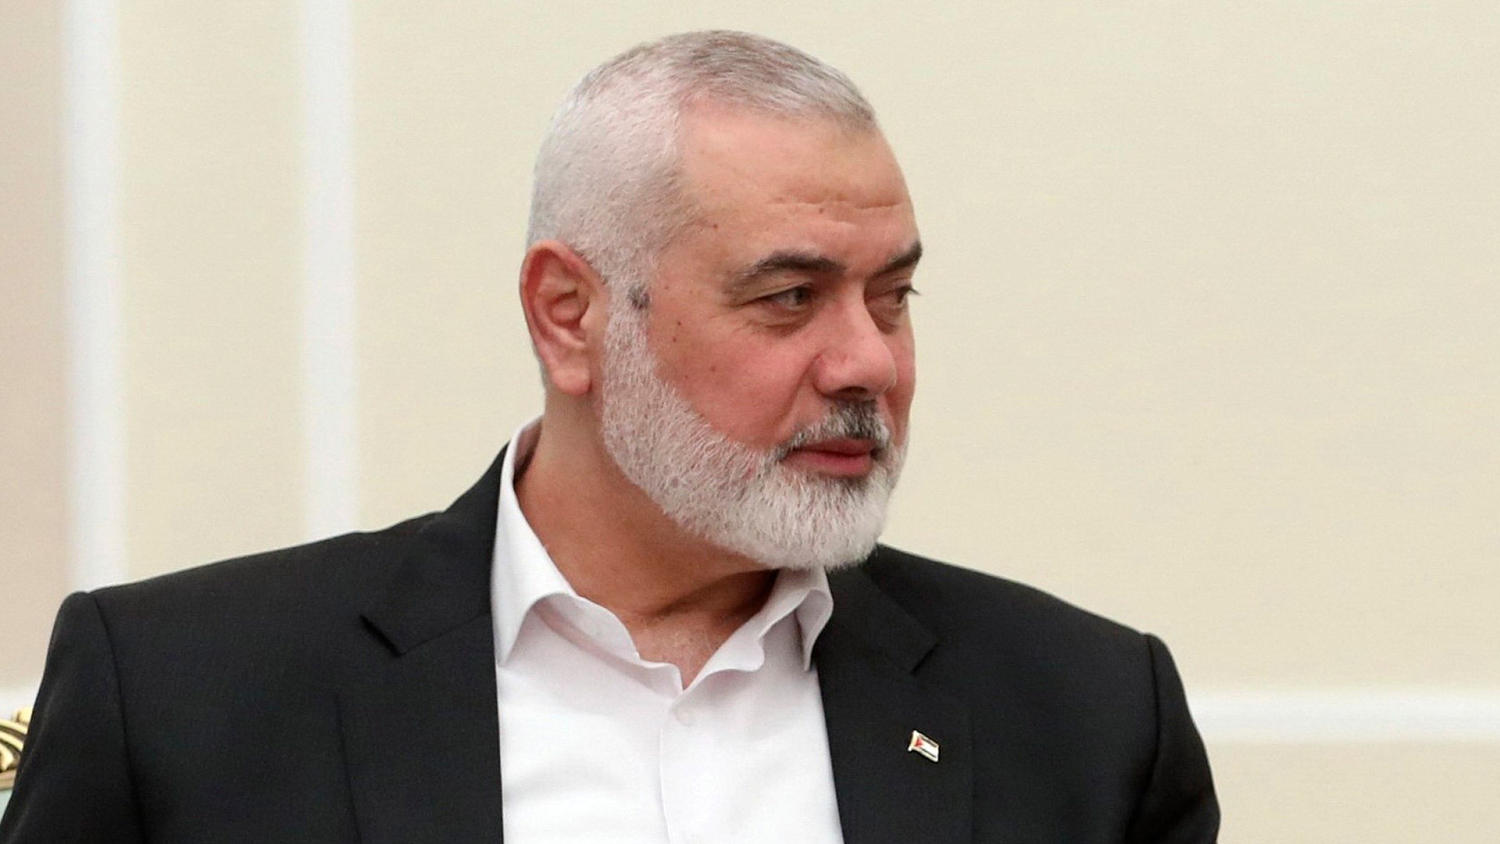 Top Hamas leader killed in Iran, raising tensions in the region